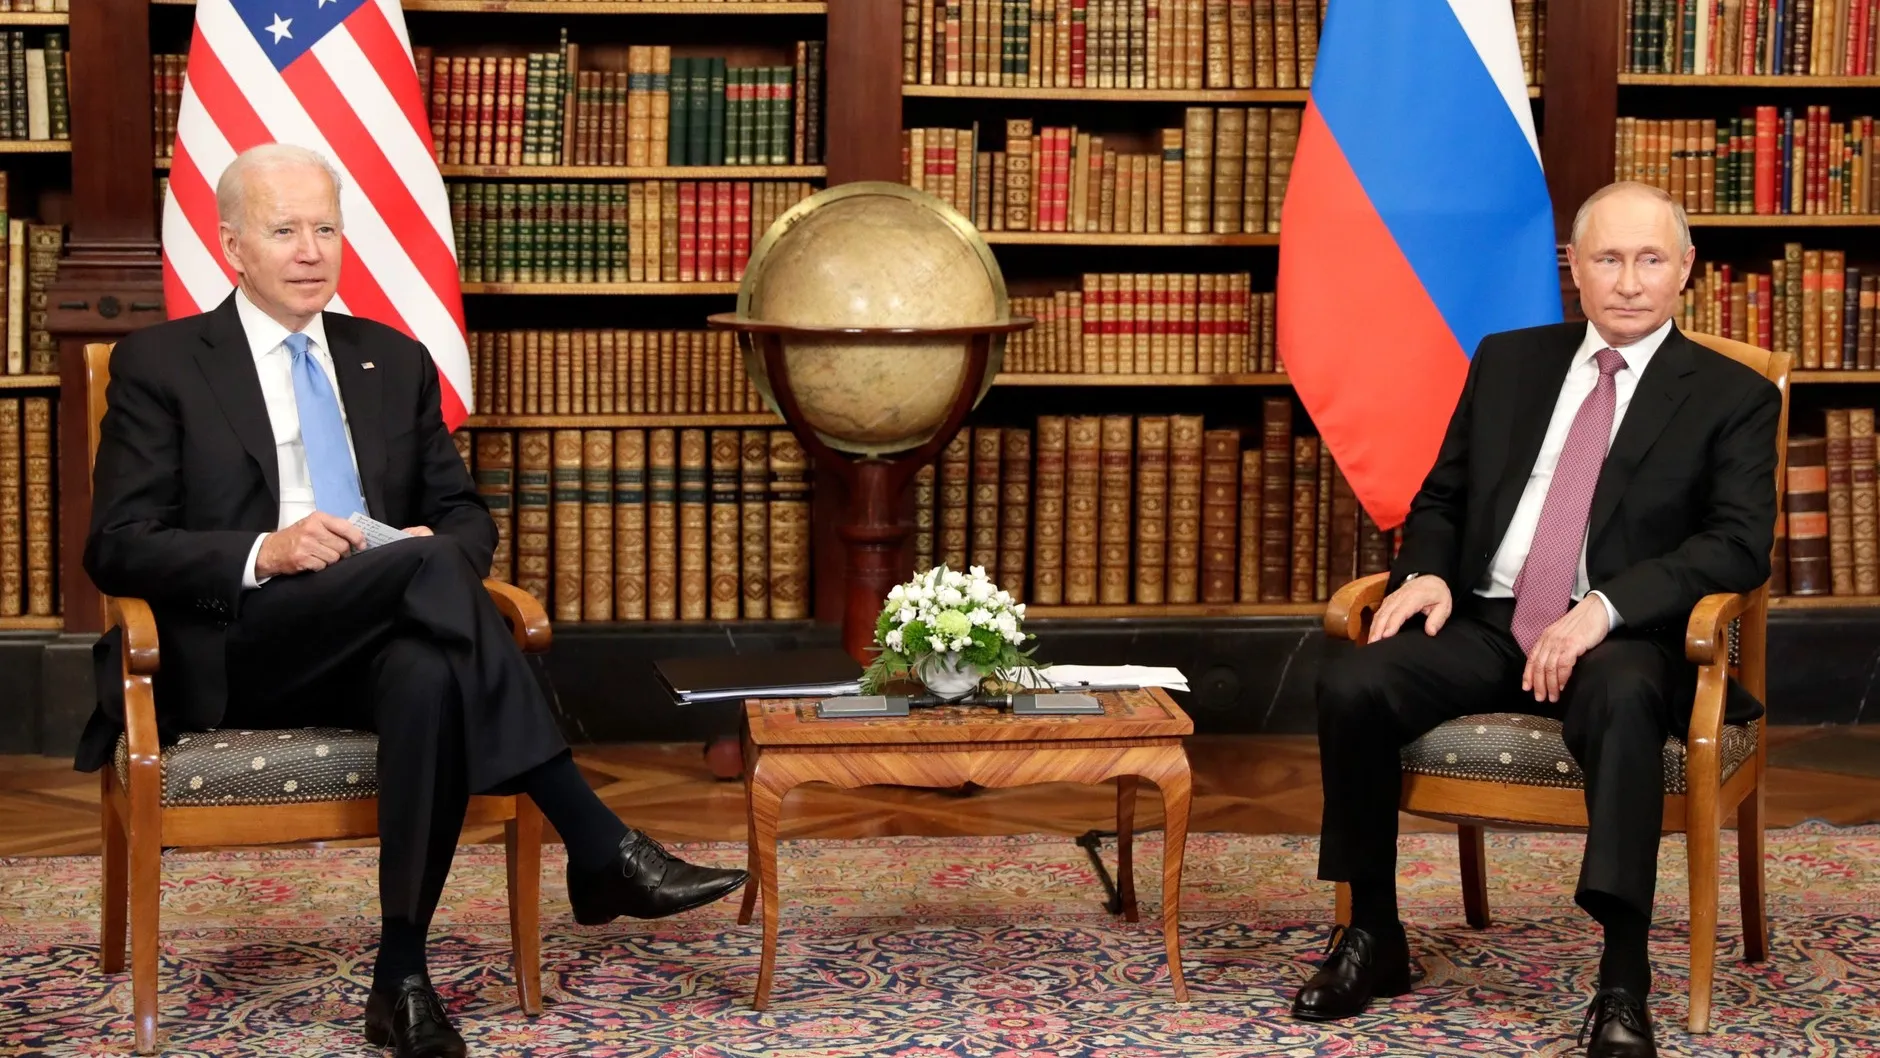 Фото: пресс-служба президента России